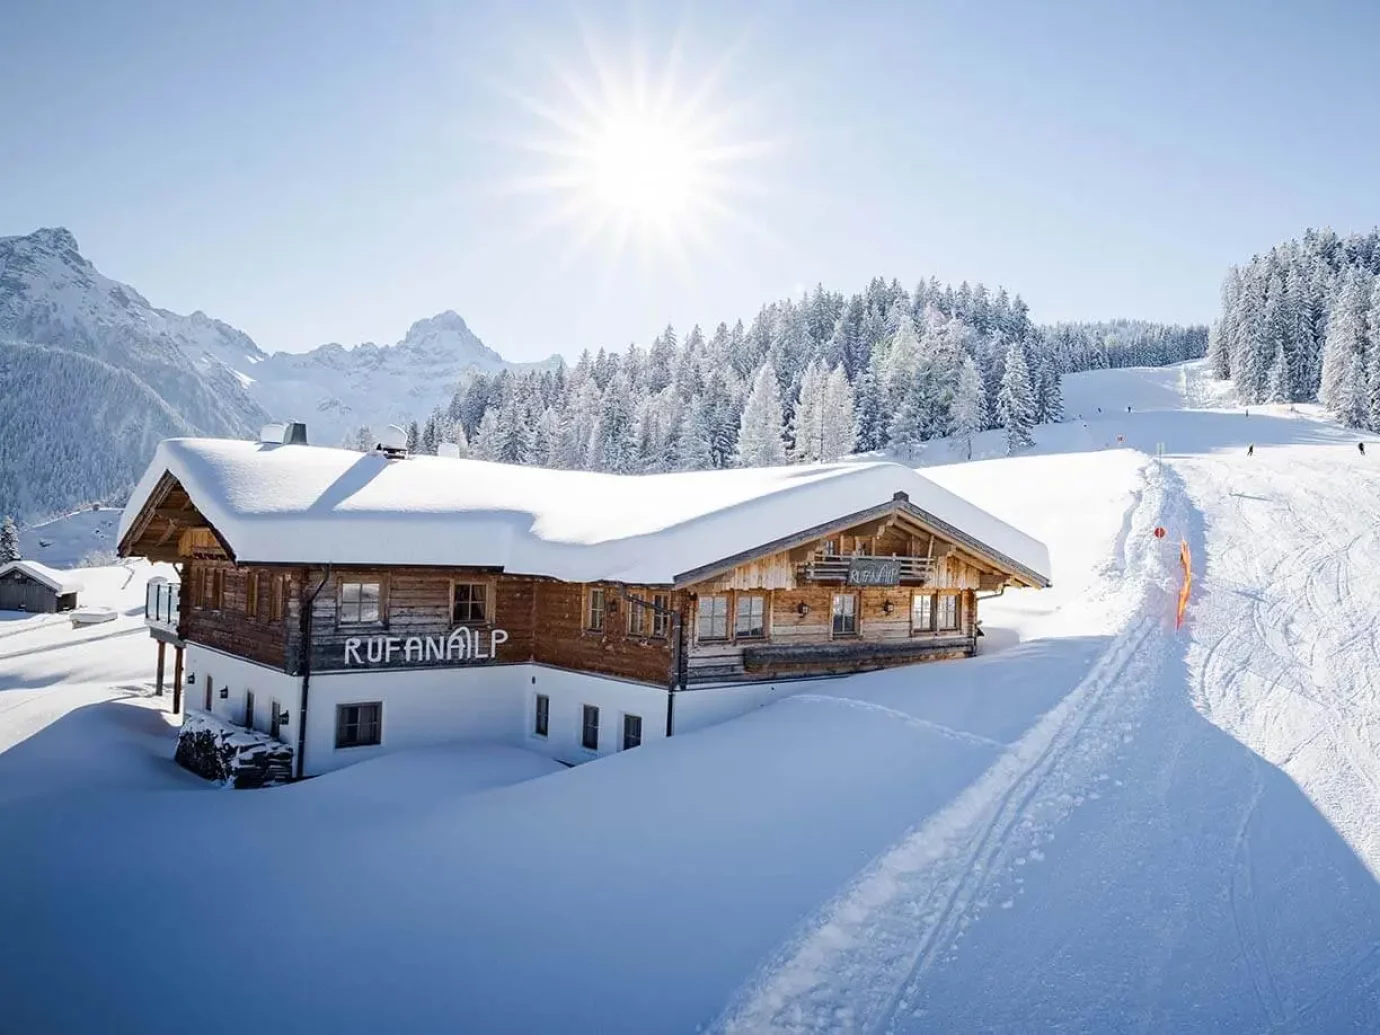 Rufana Alp - Skigebiet Brandnertal